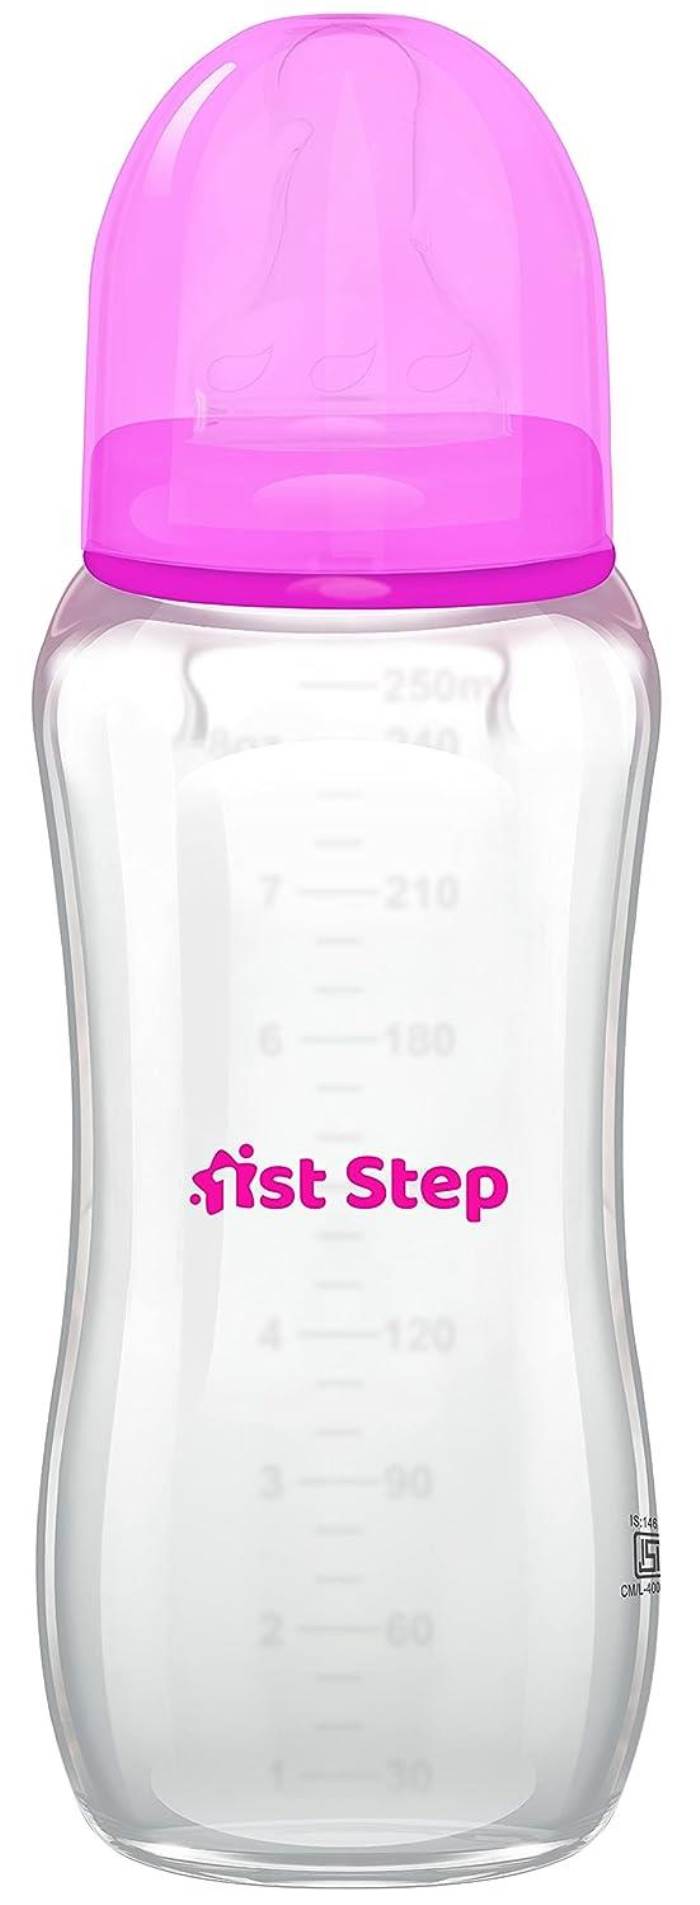 1st Step 8 oz./250 ml BPA Free Feeding Bottle- (Pink, 8 oz./250 ml.)